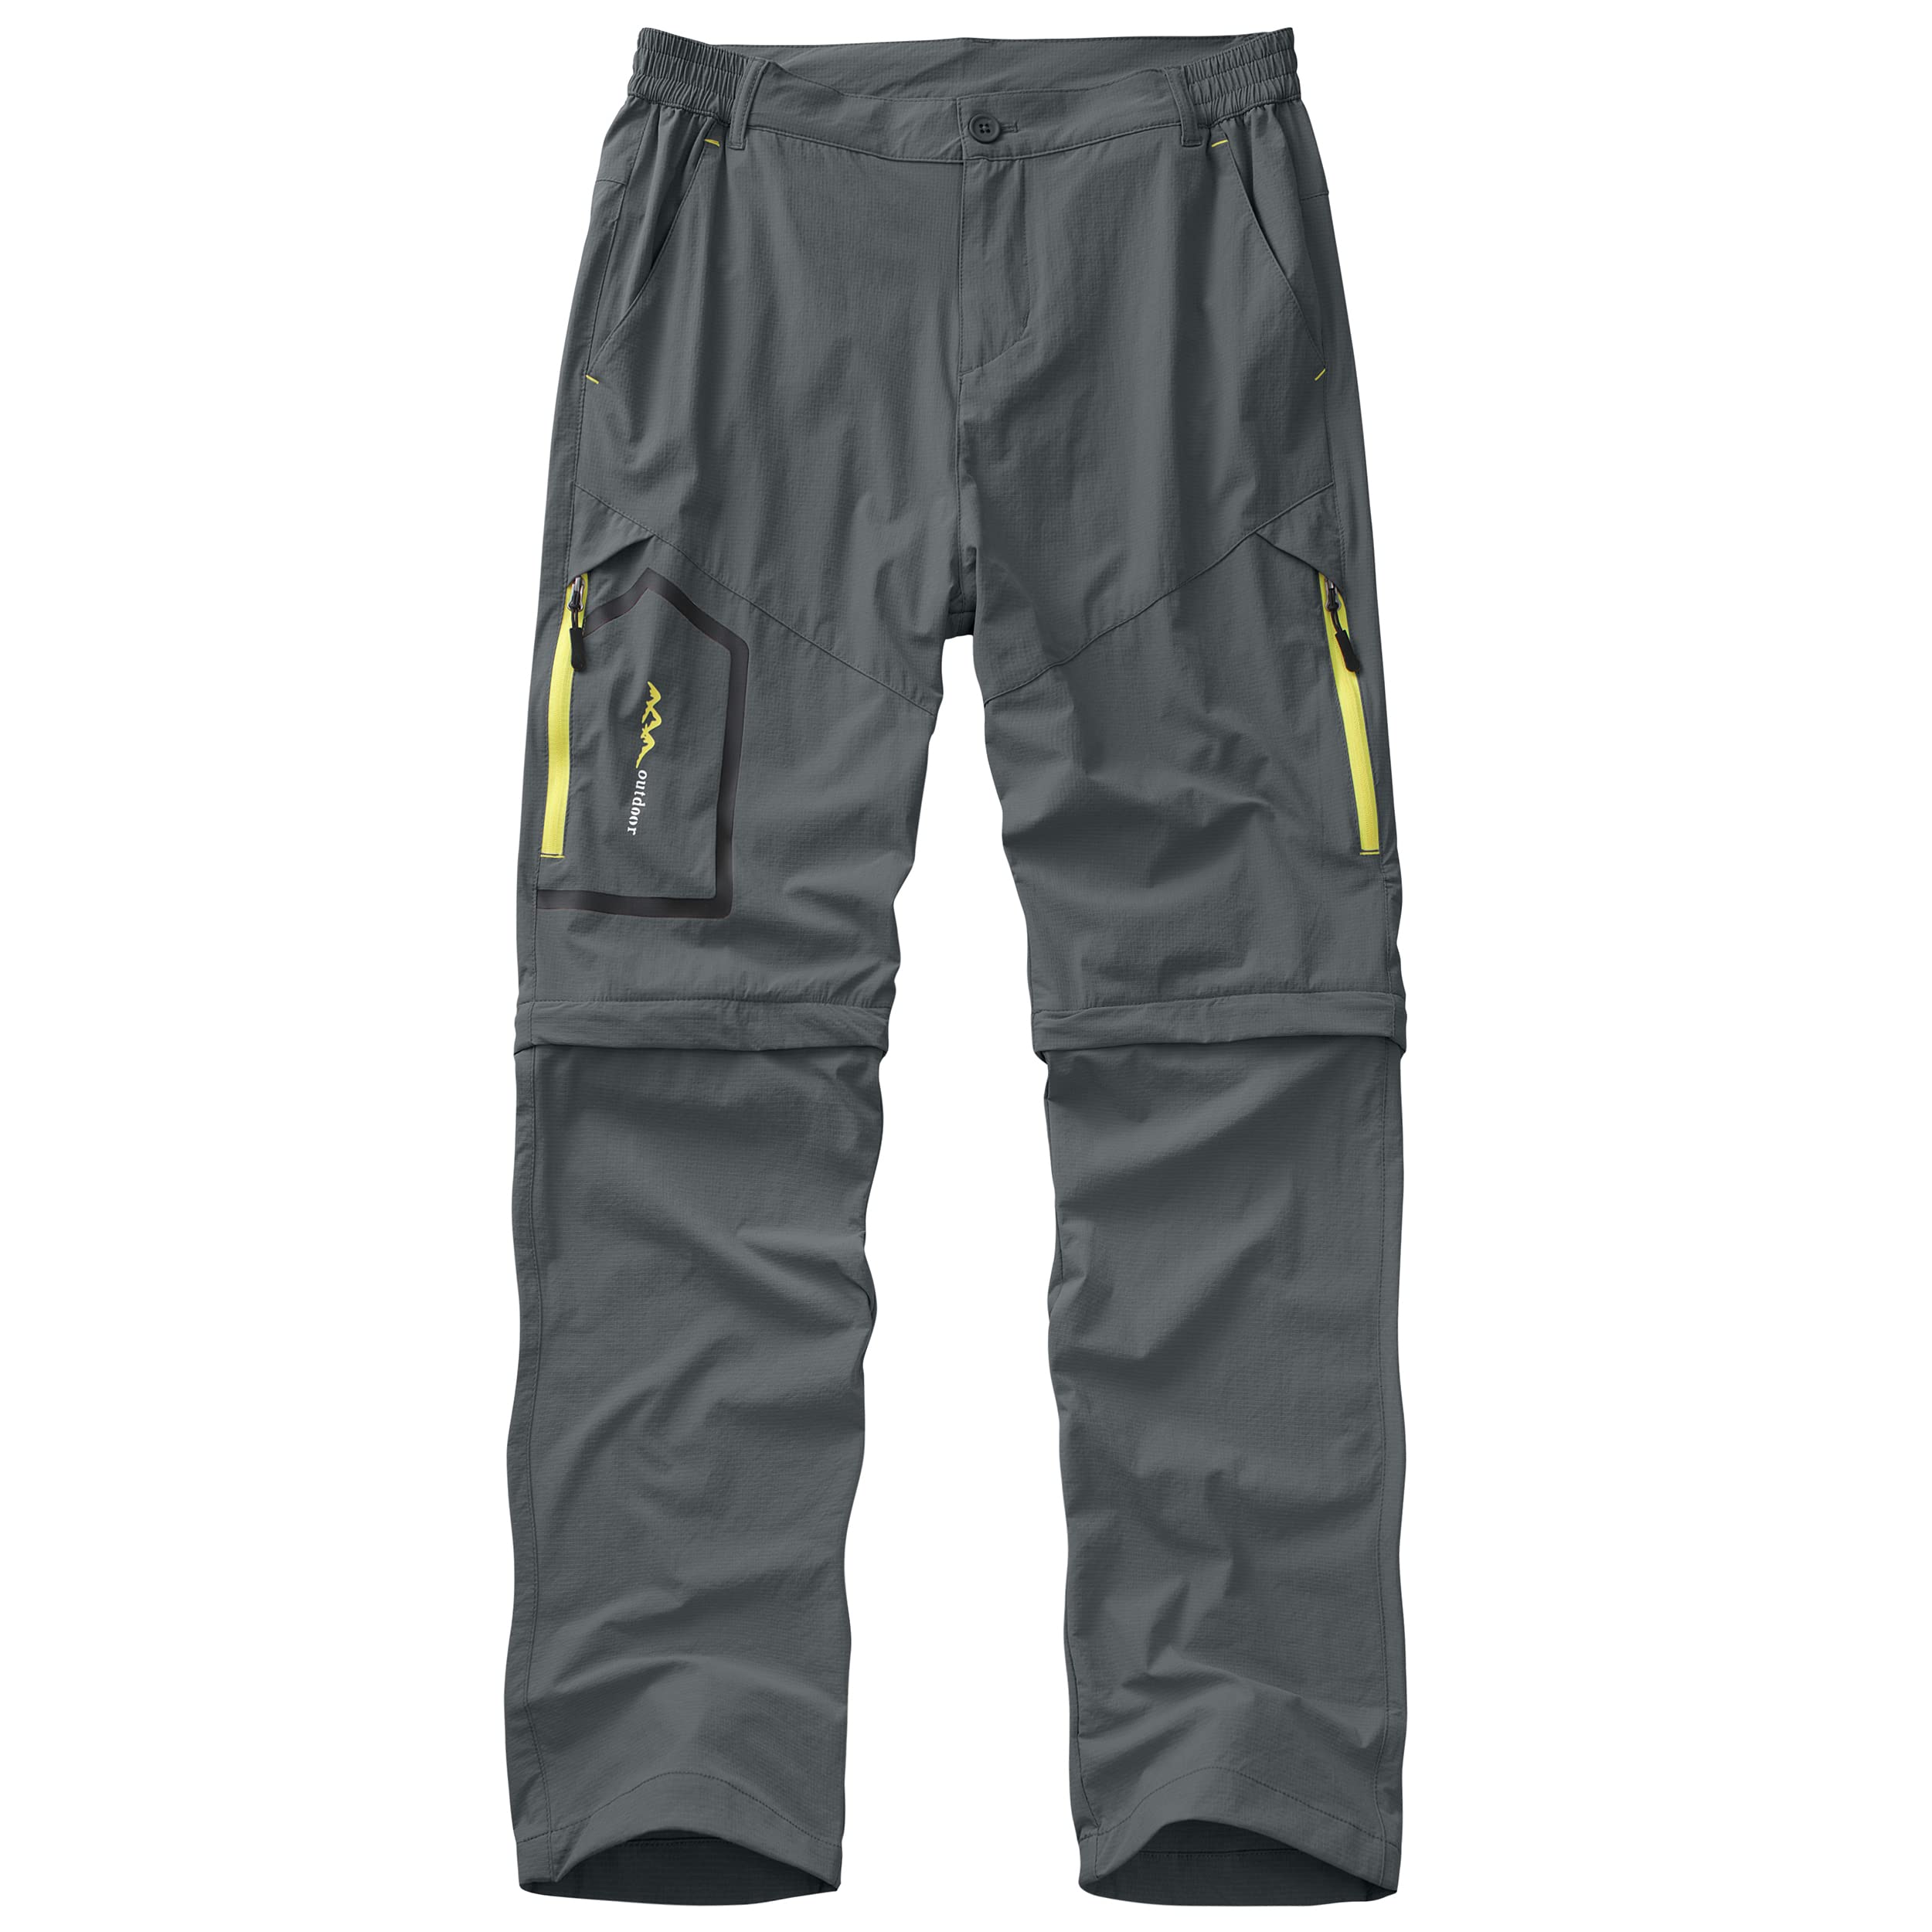 Mens Hiking Stretch Pants Convertible Quick Dry Lightweight Zip Off Outdoor Travel Safari Pants (818 Dark Grey 32)